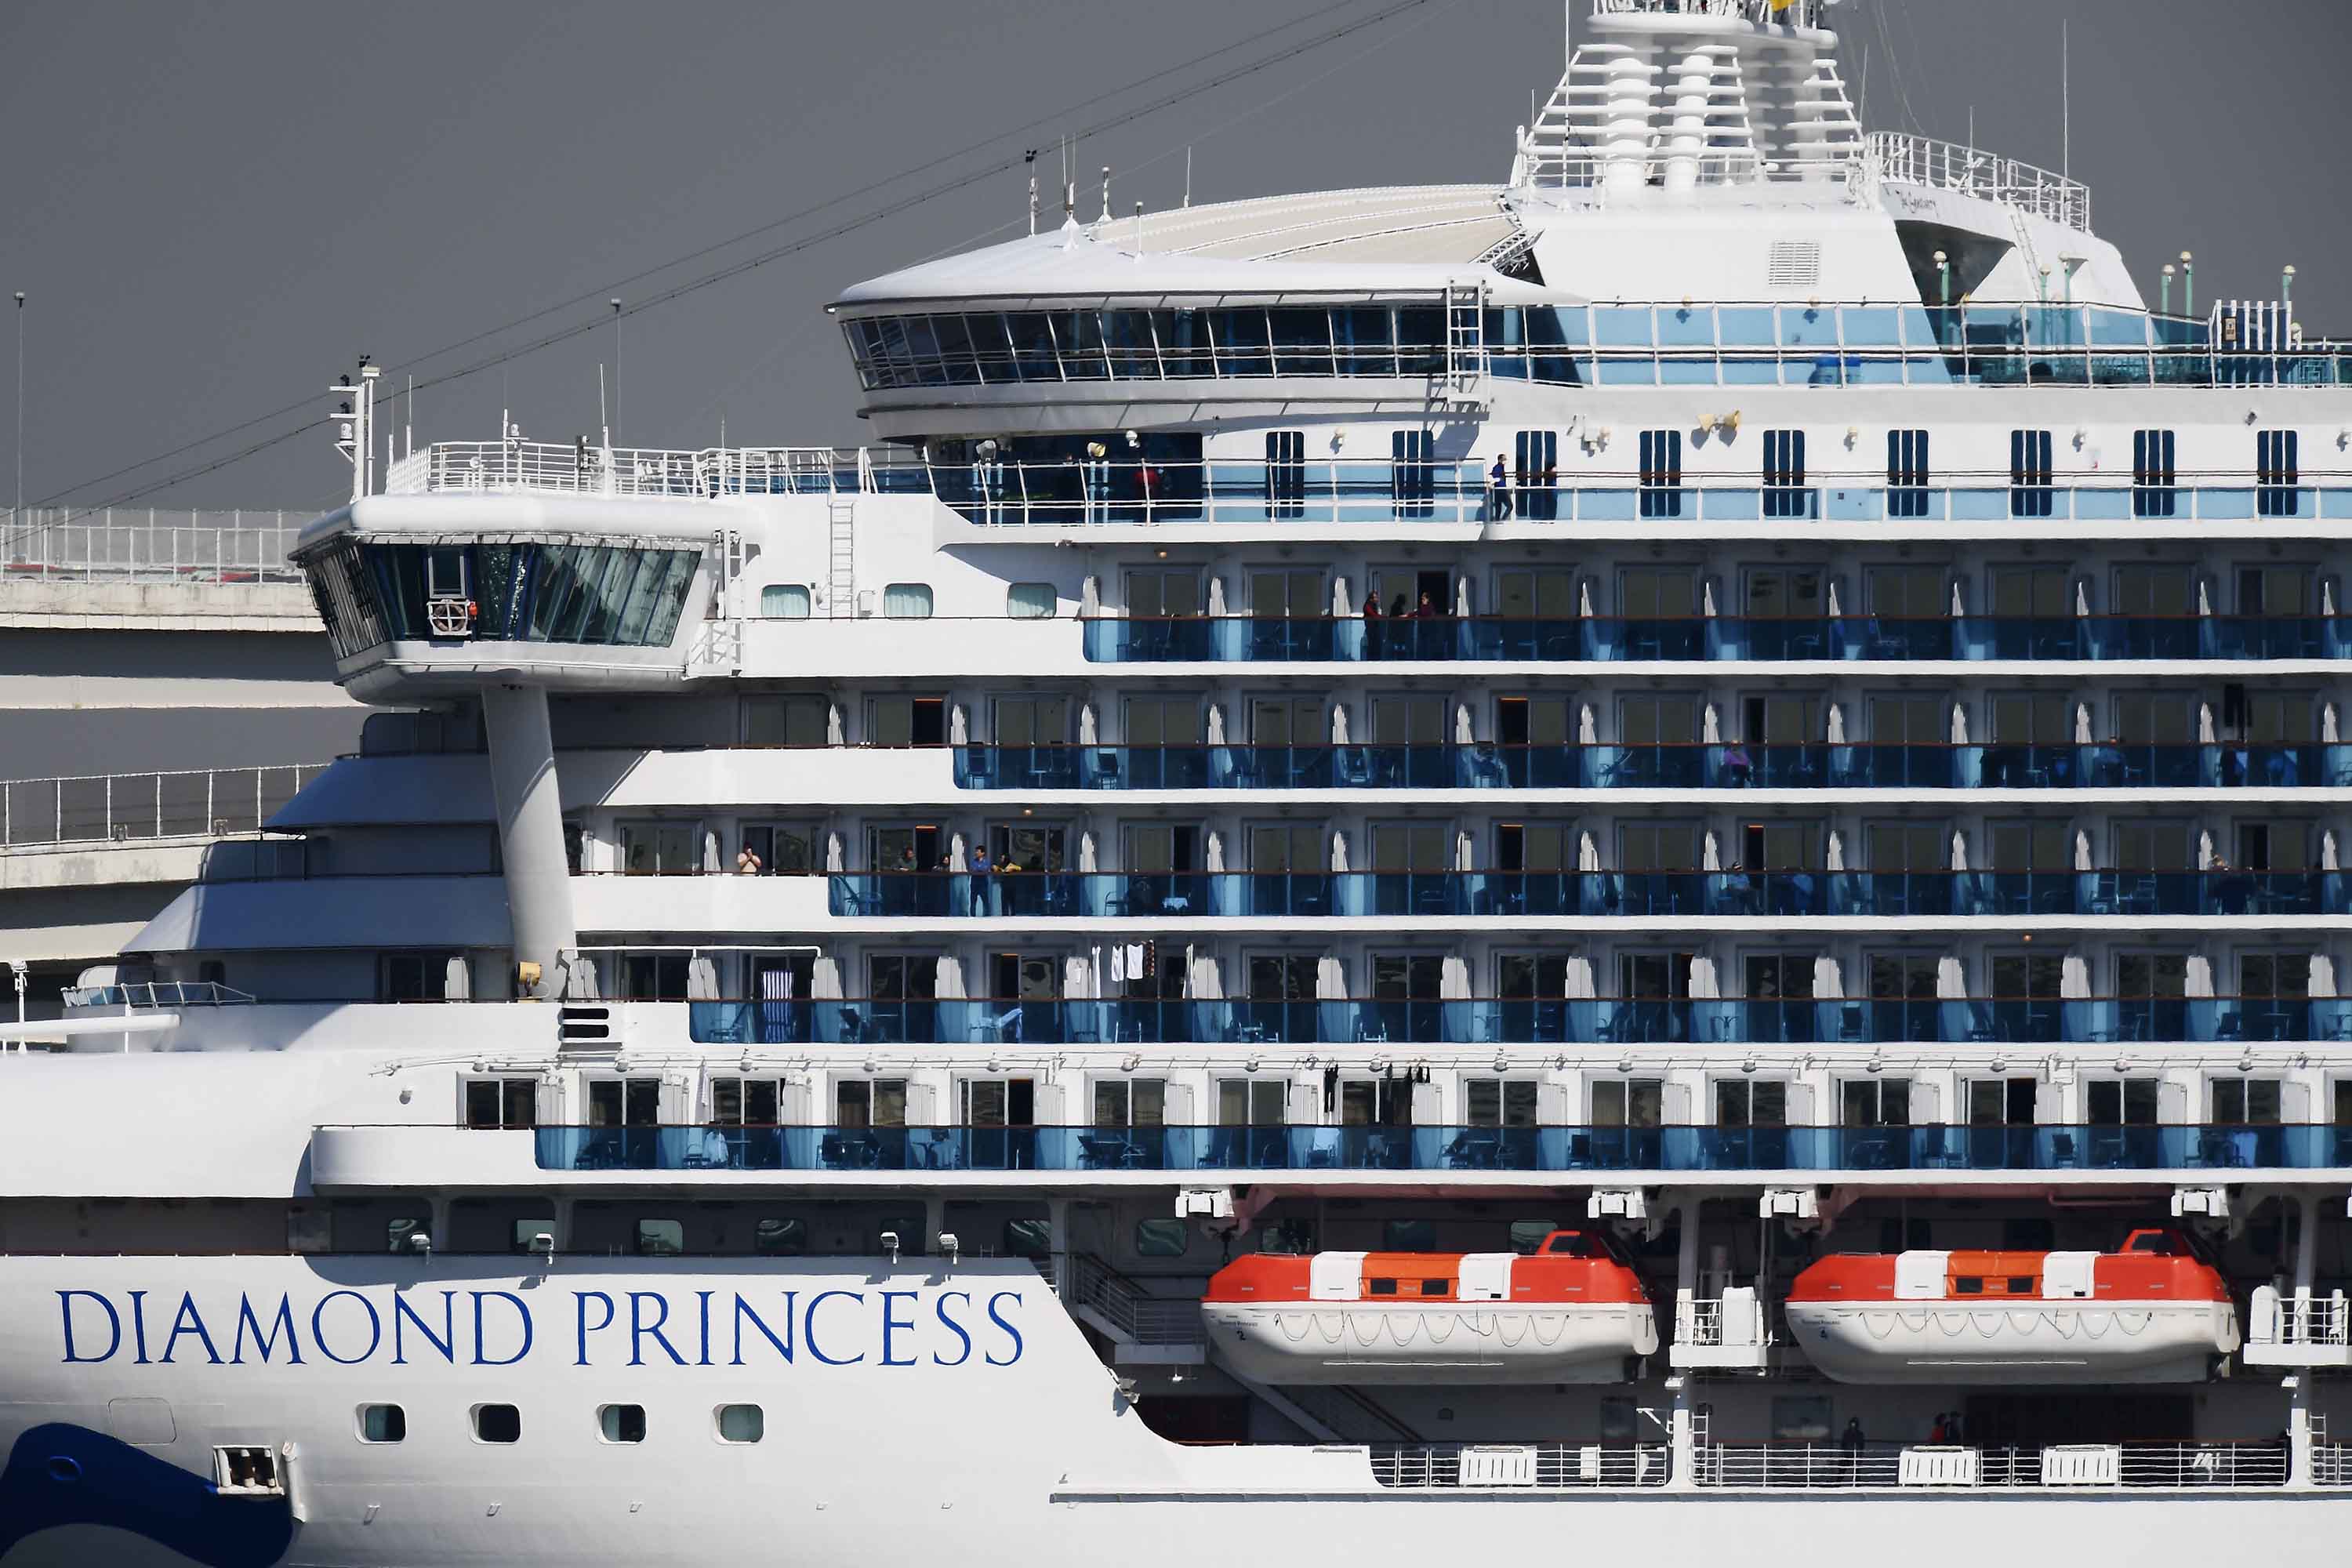 Passengers stand on balconies on the Diamond Princess cruise ship at the Daikoku Pier Cruise Terminal in Yokohama, Japan, on Monday.